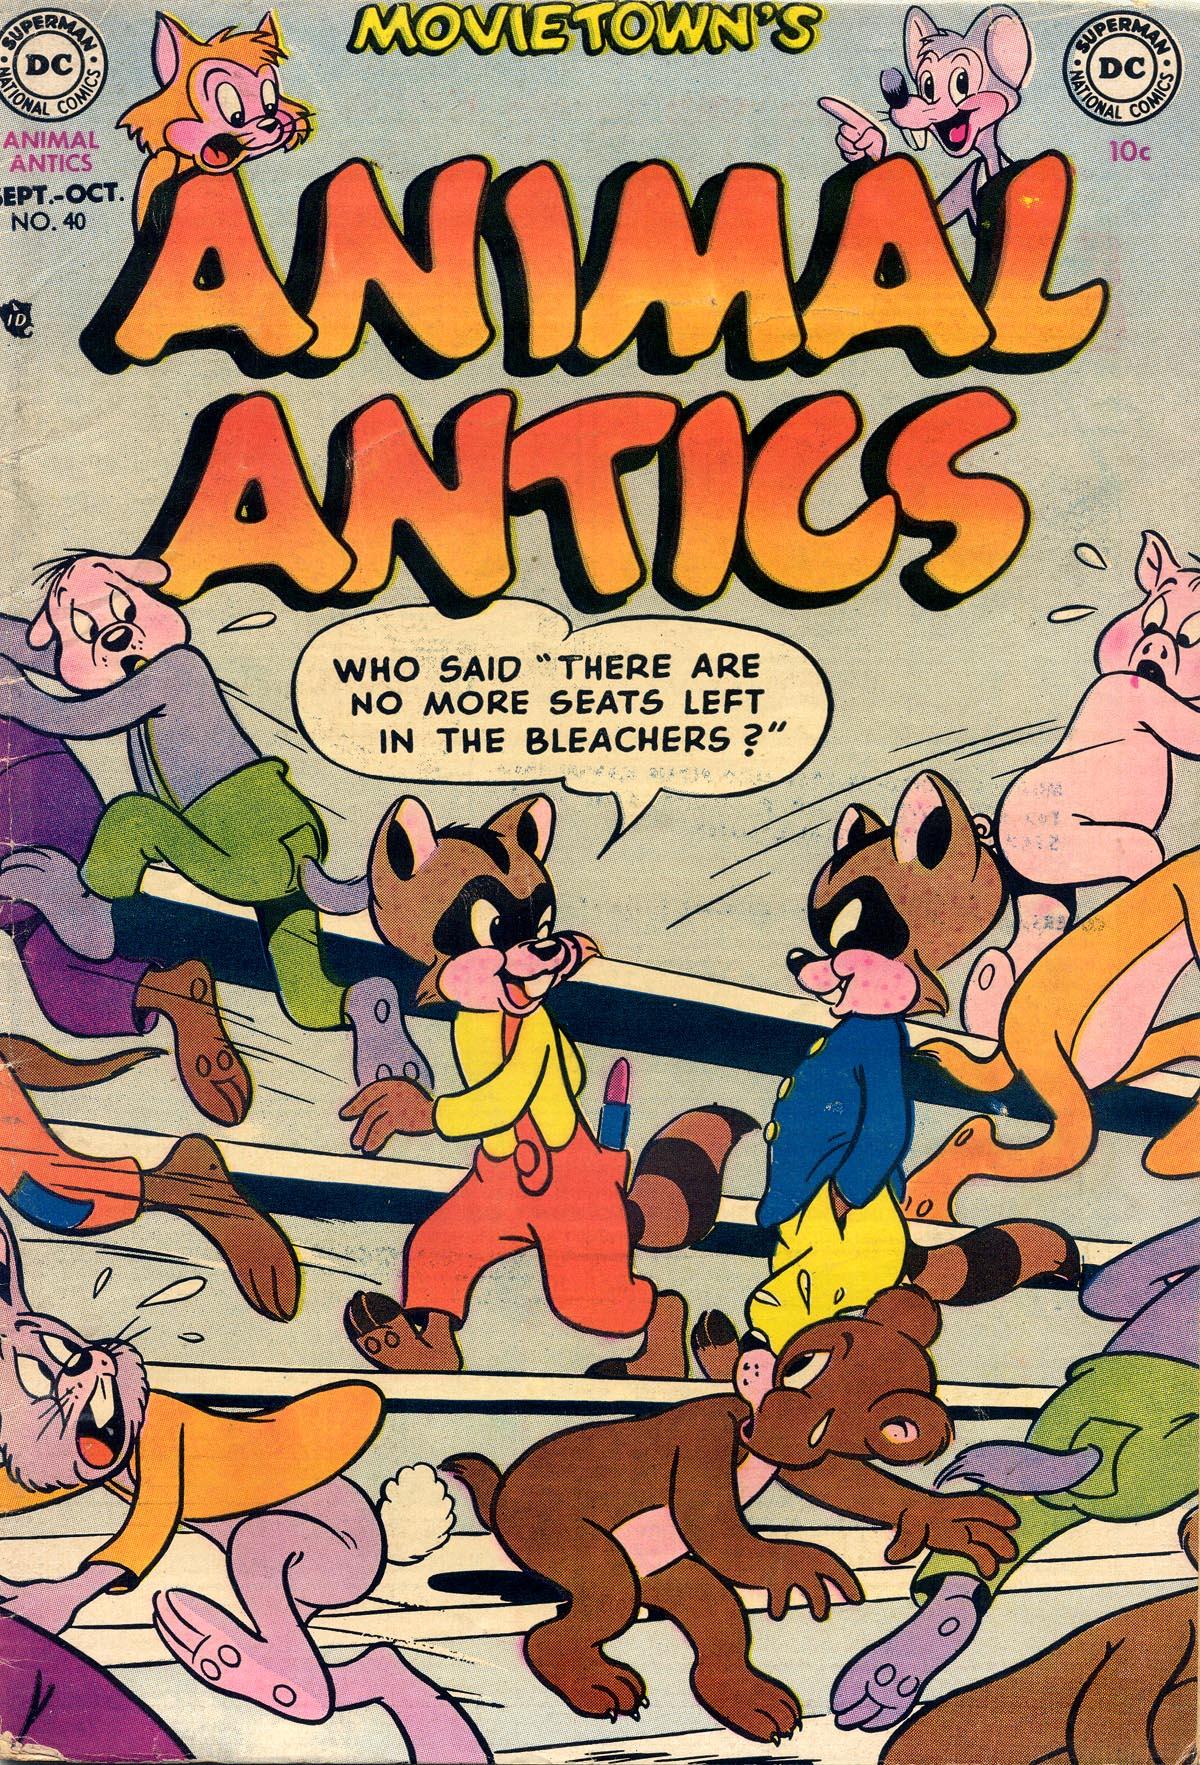 Movietown's Animal Antics Vol. 1 #40